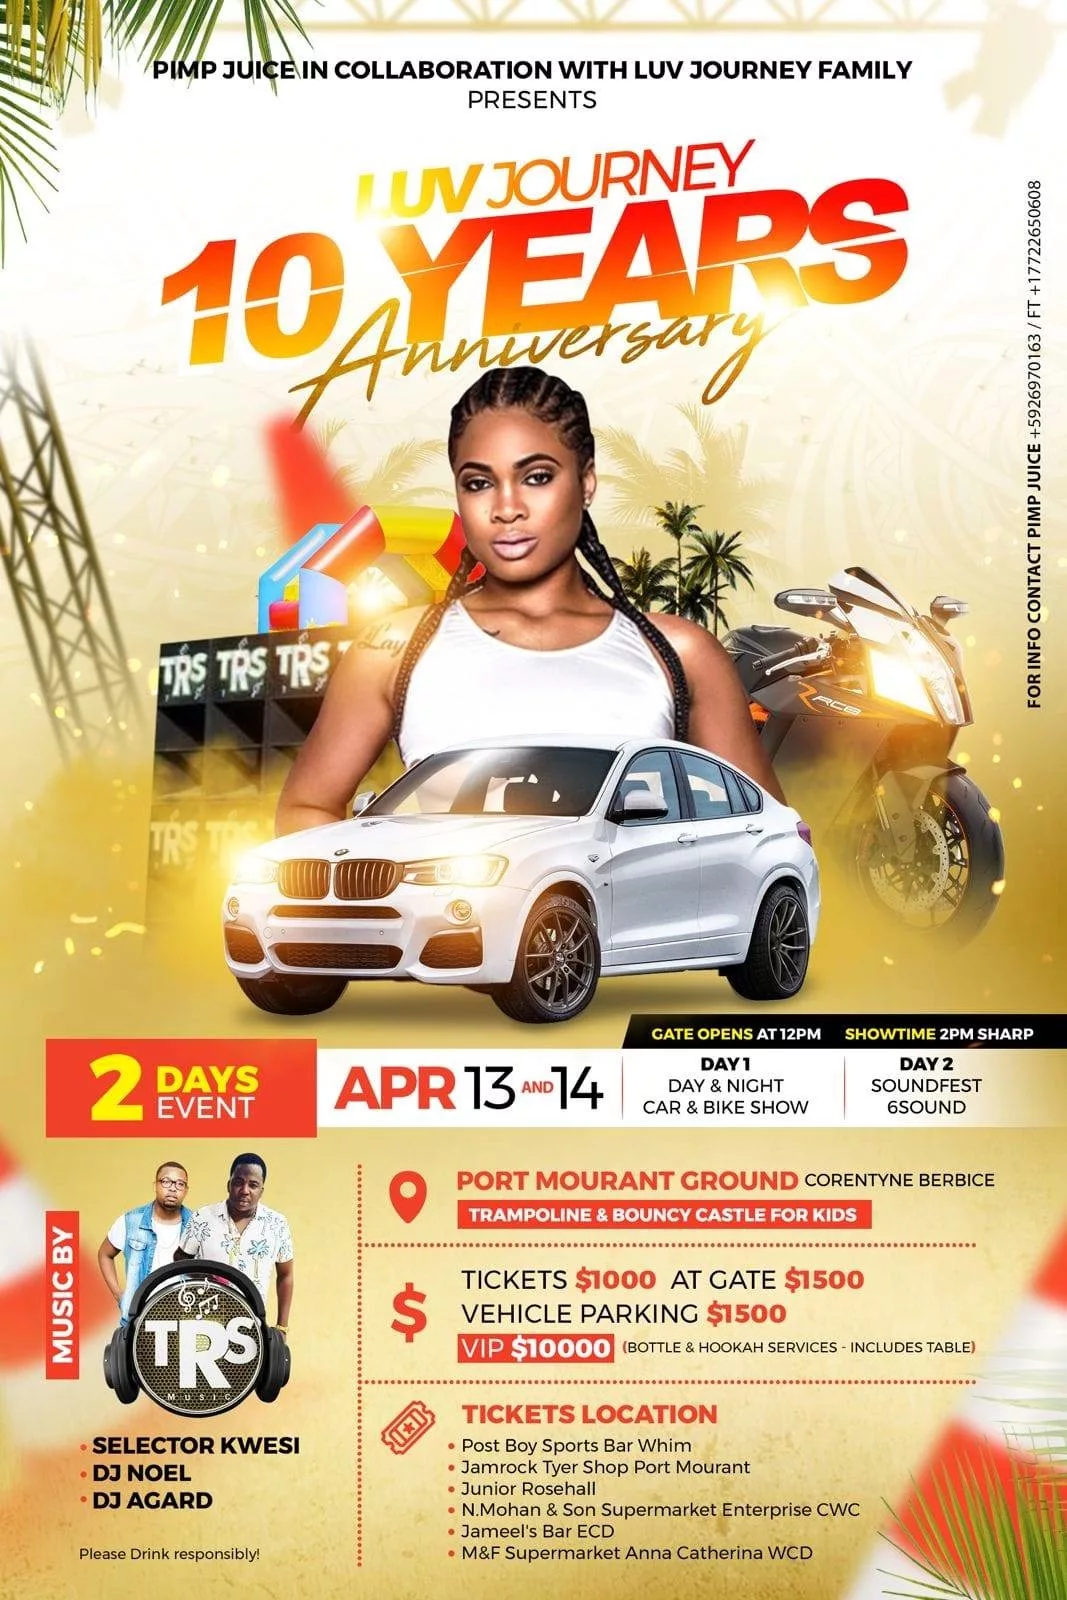 Car & Bike Show, Sound Fest - Guyana